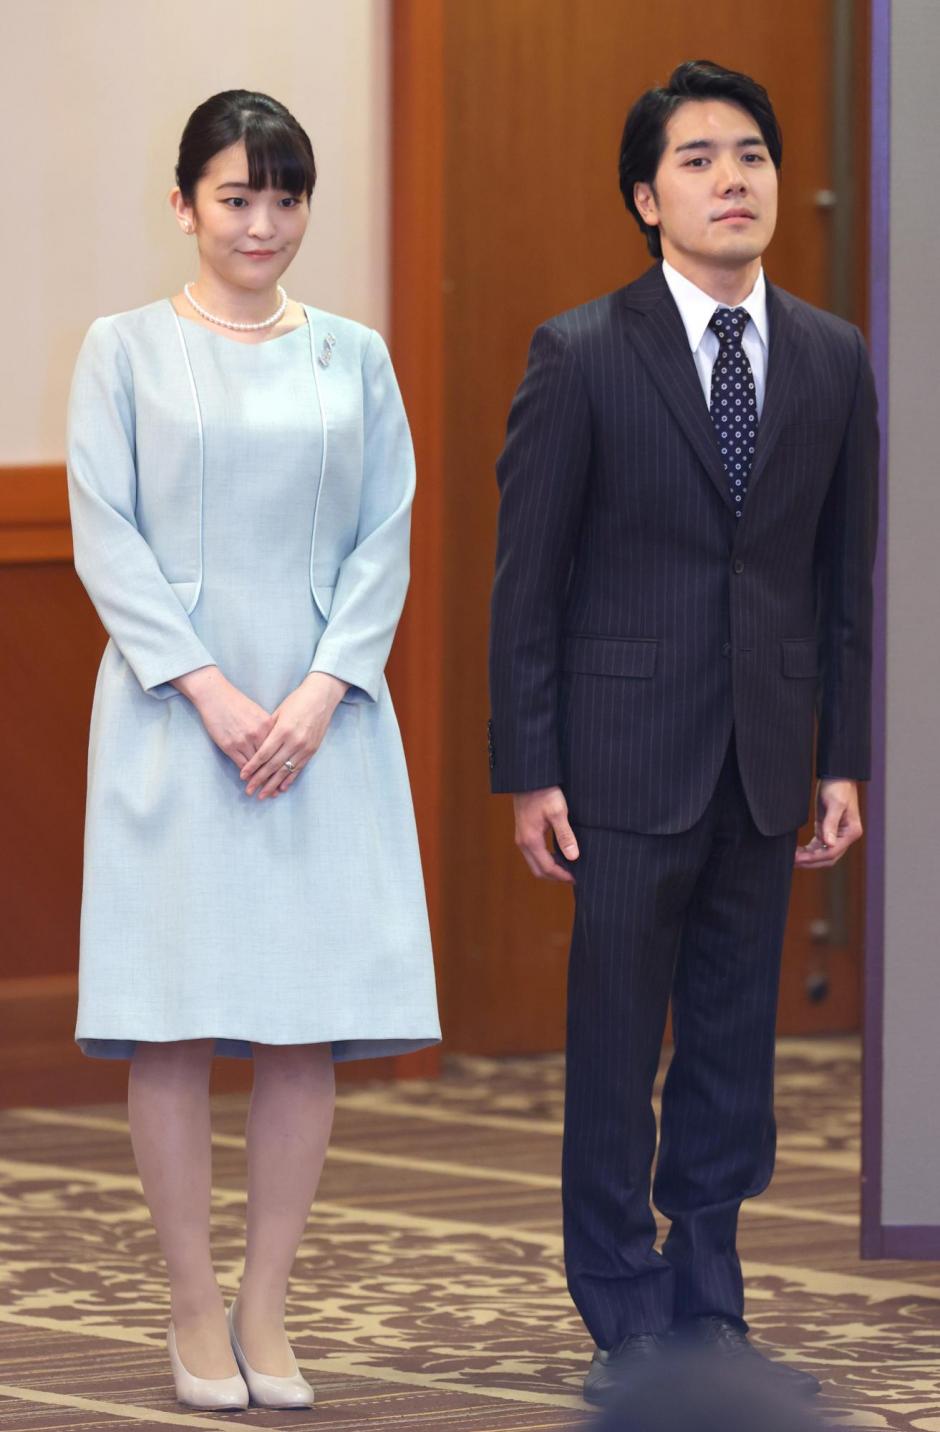 Mako Komuro (former Princess Mako of Akishino) and Kei Komuro attending a press conference to announce their marriage